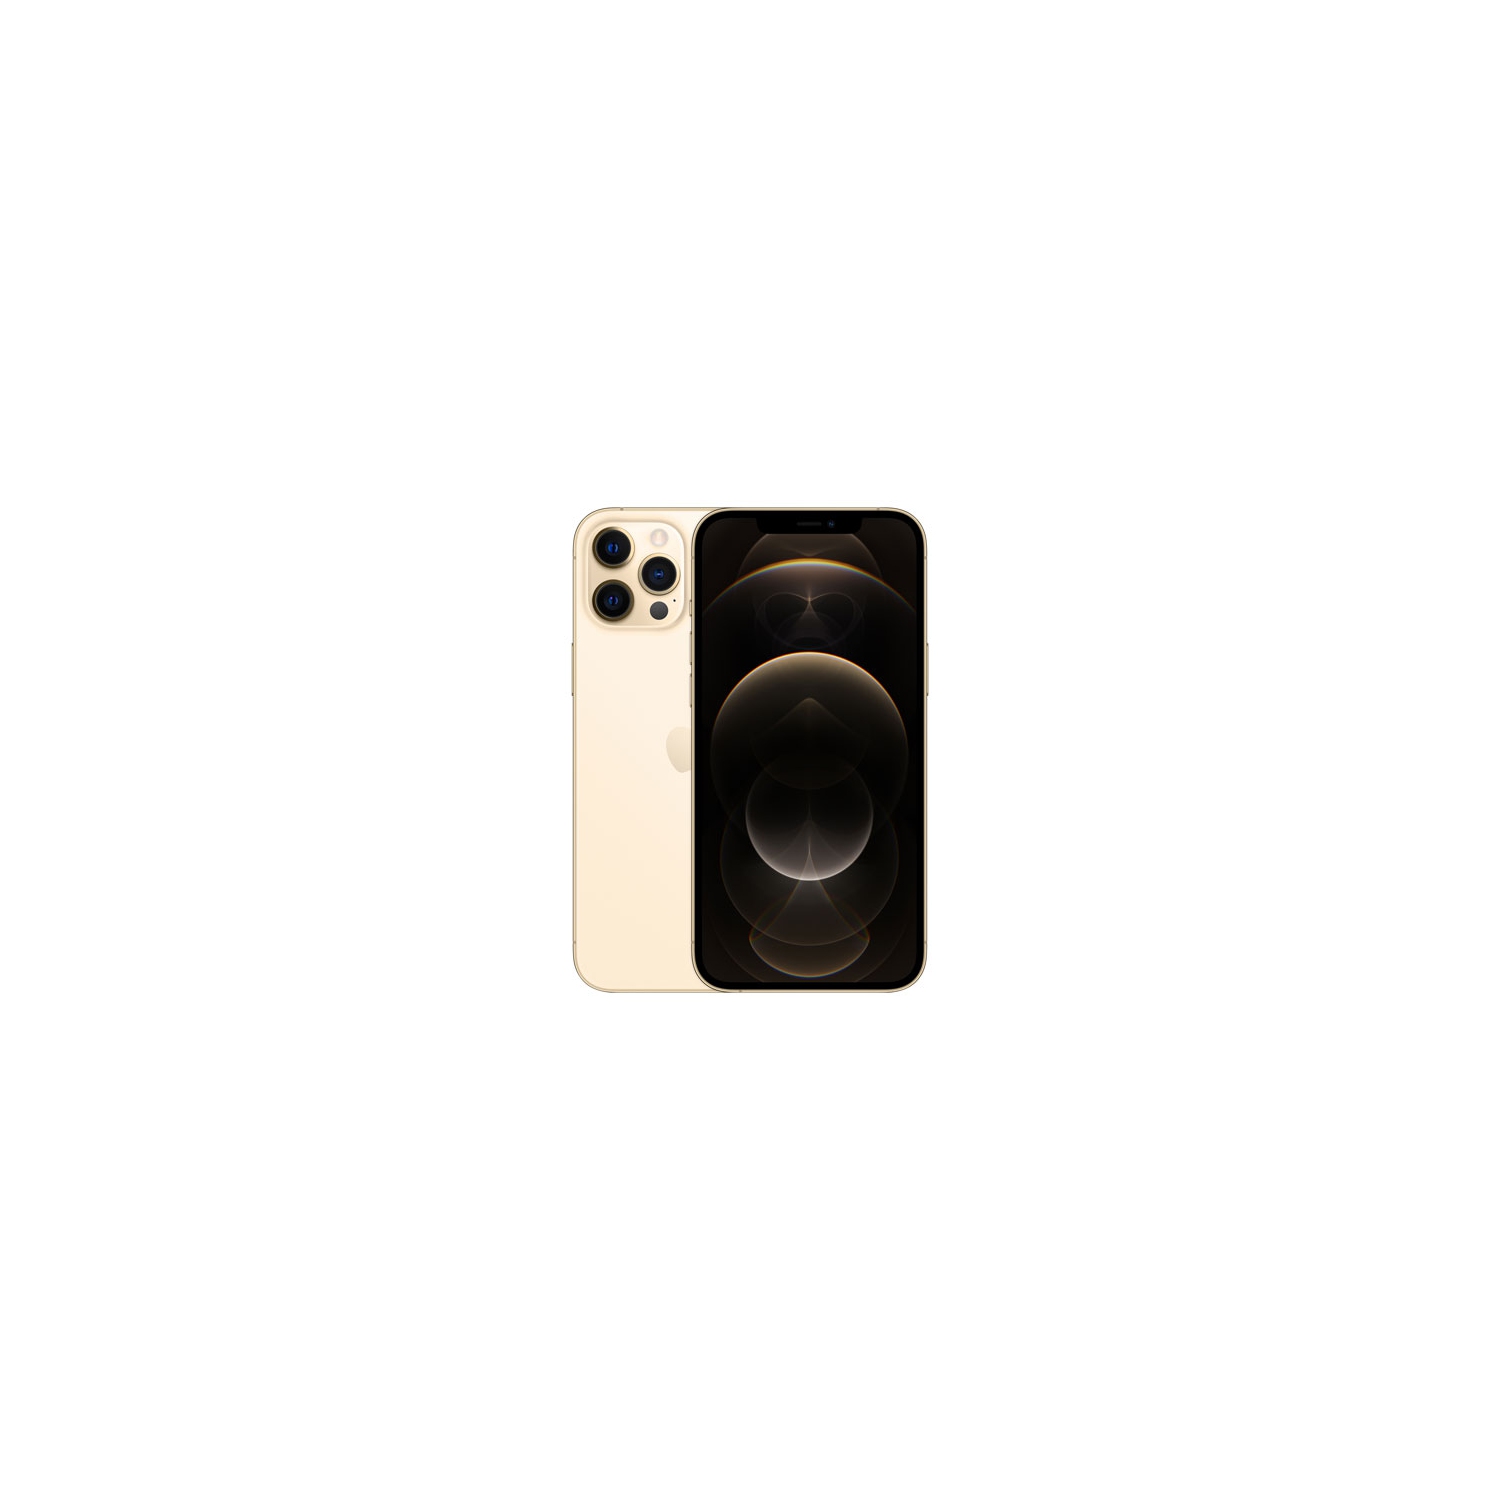 Apple iPhone 12 Pro Max 512GB Smartphone - Gold - Unlocked - Open Box